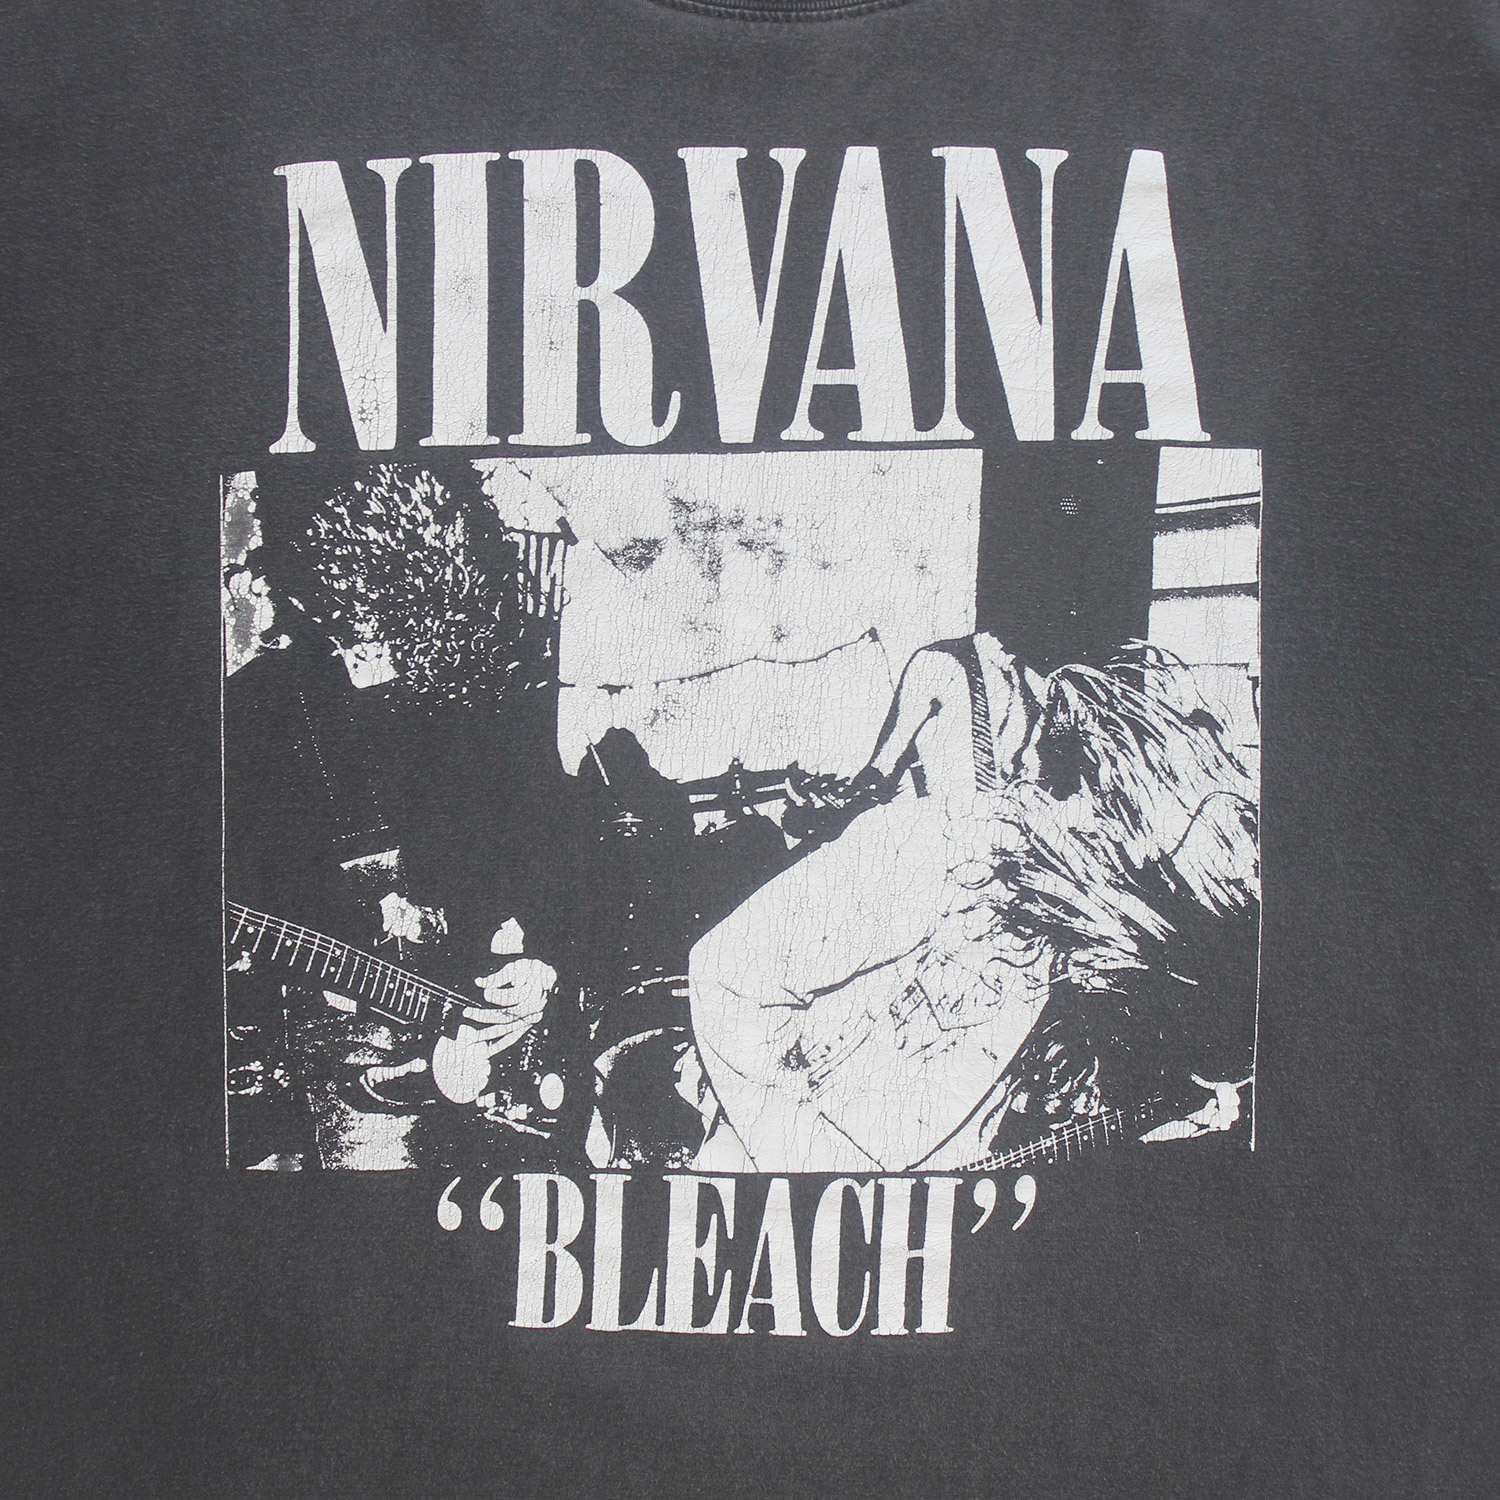 http://blackshirtsworld.com/products/nirvana-bleach-t-shirt/NIRVANA-BLEACH-T-SHIRT-3.jpg